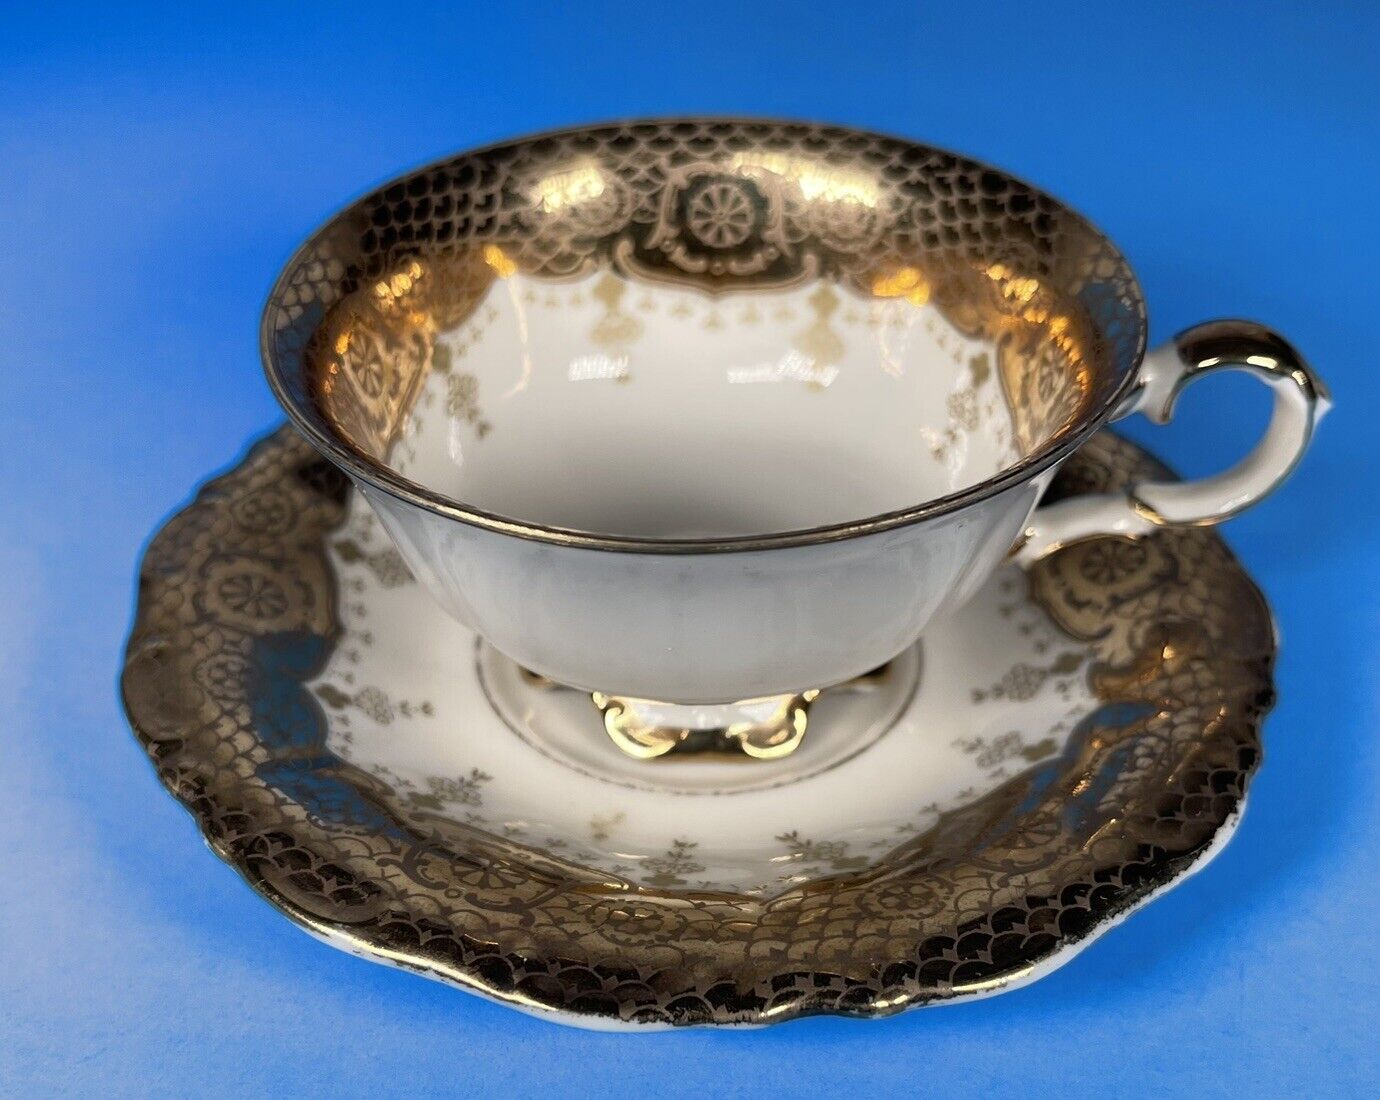 Vintage Bavaria Teacup Demitasse Cup and Saucer Gold White Waldershof Germany